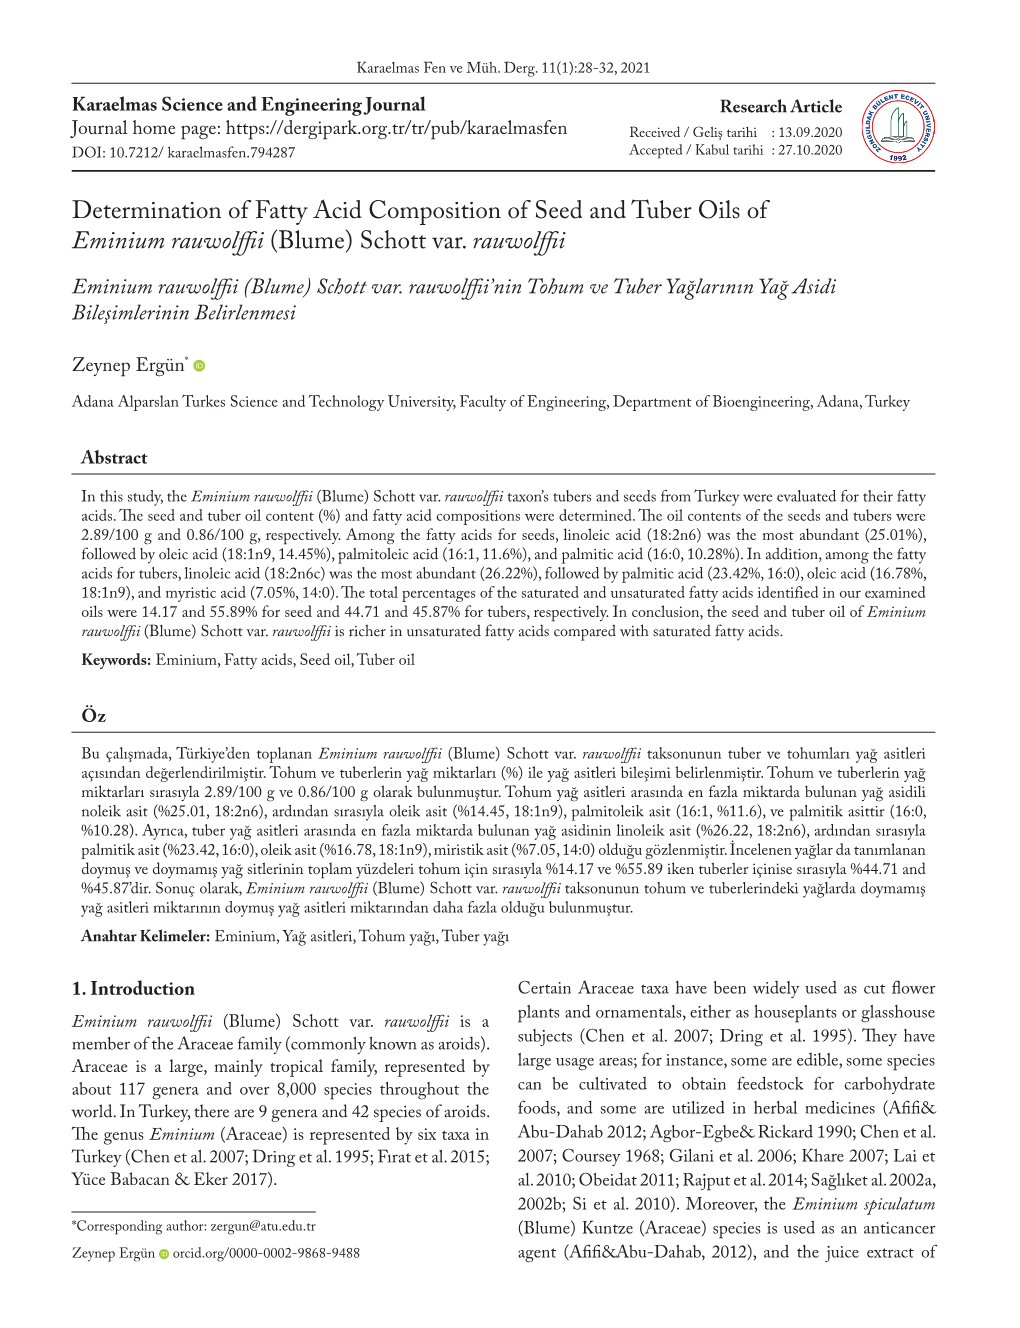 Determination of Fatty Acid Composition of Seed and Tuber Oils of Eminium Rauwolffii (Blume) Schott Var